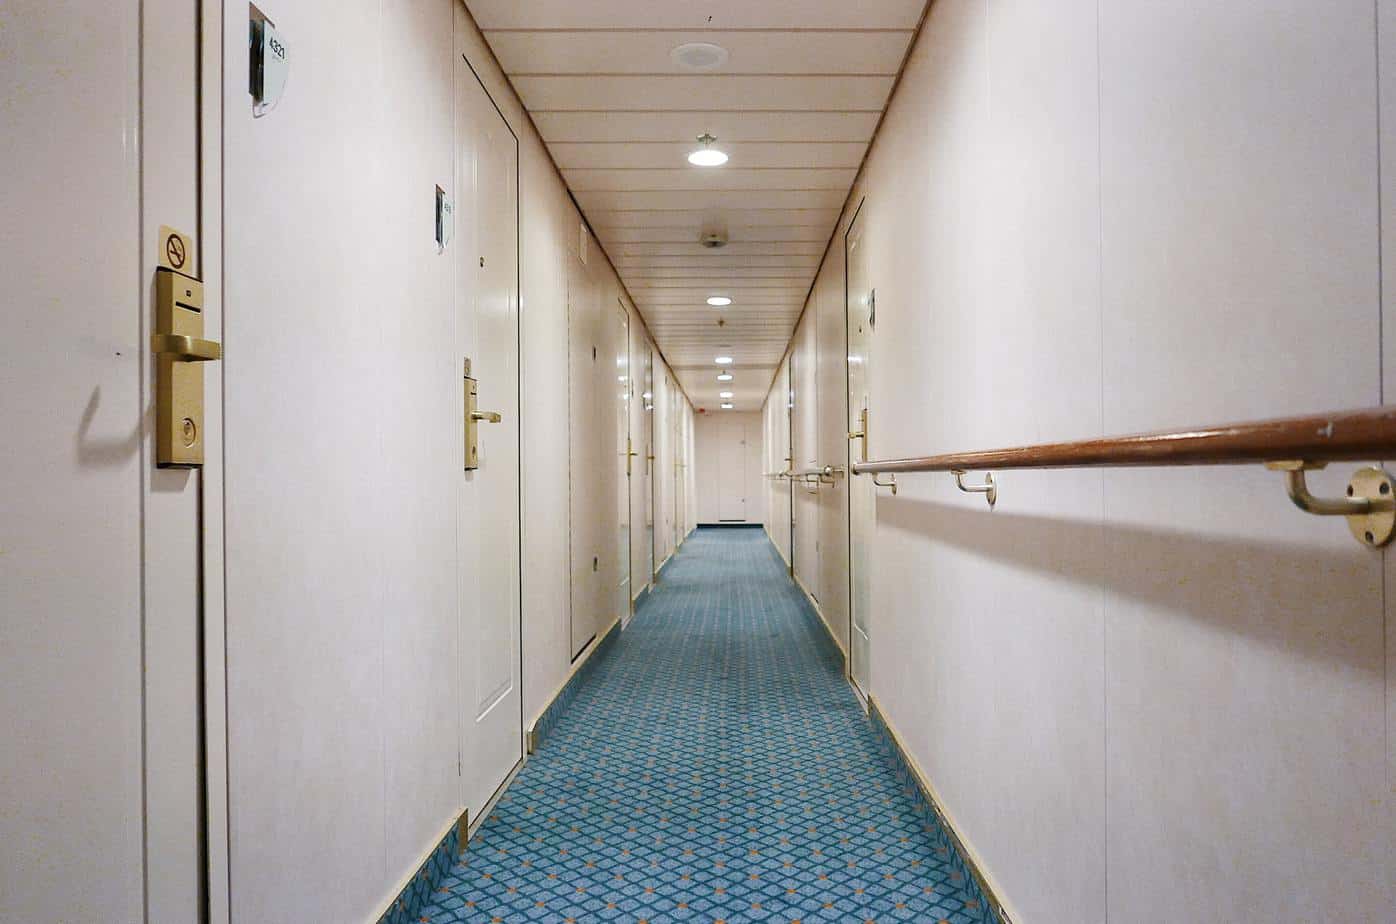 Interior design ideas for the hallway